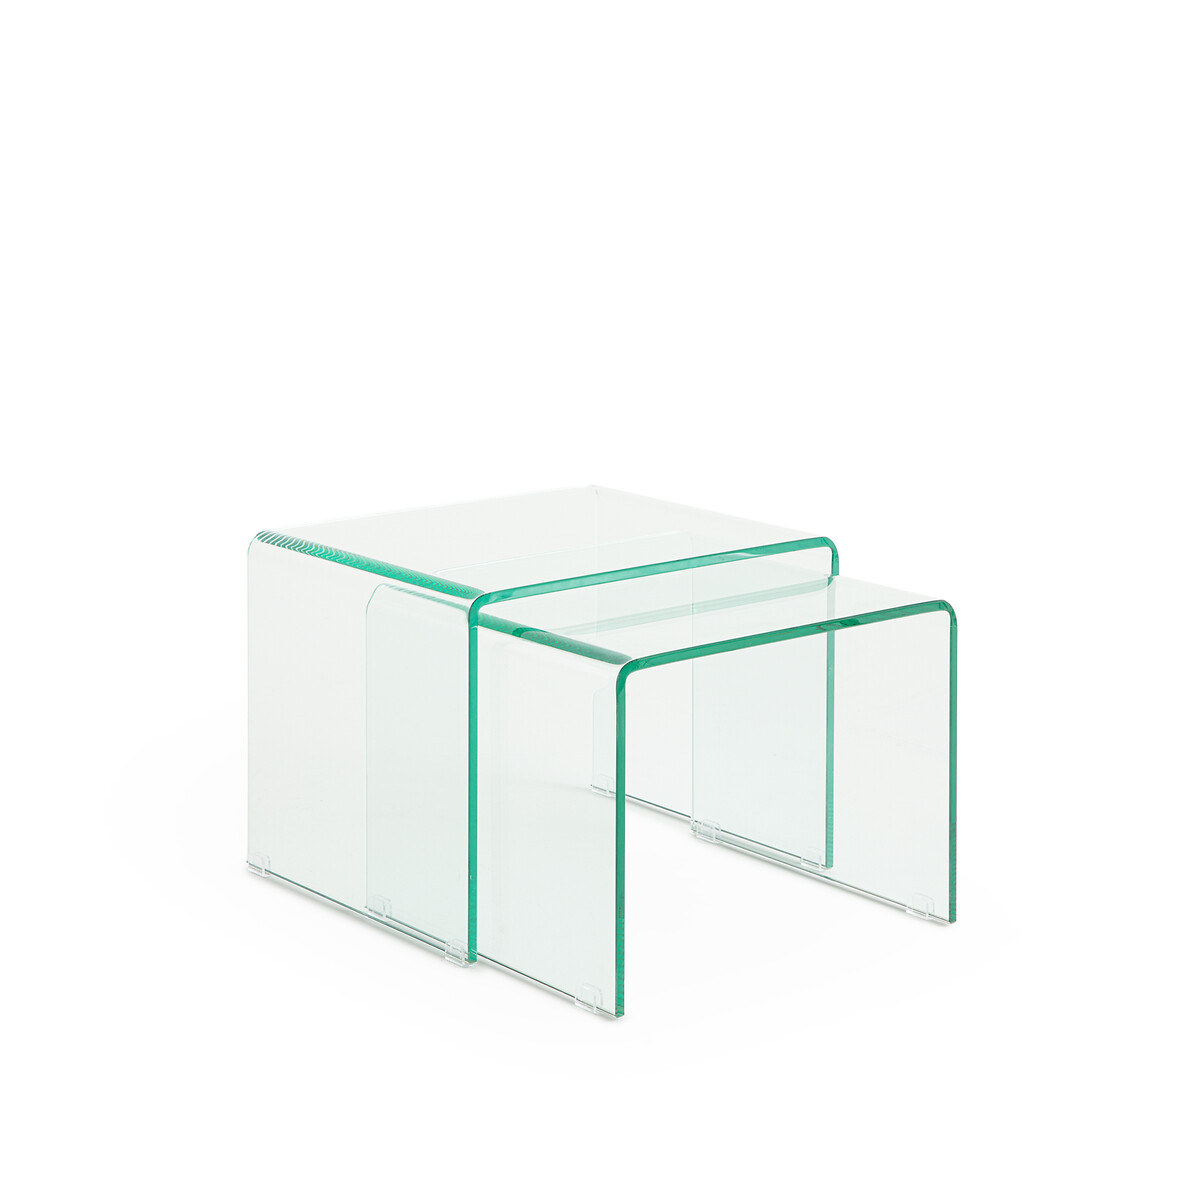 Set of 2 Cristalline Tempered Glass Side Tables